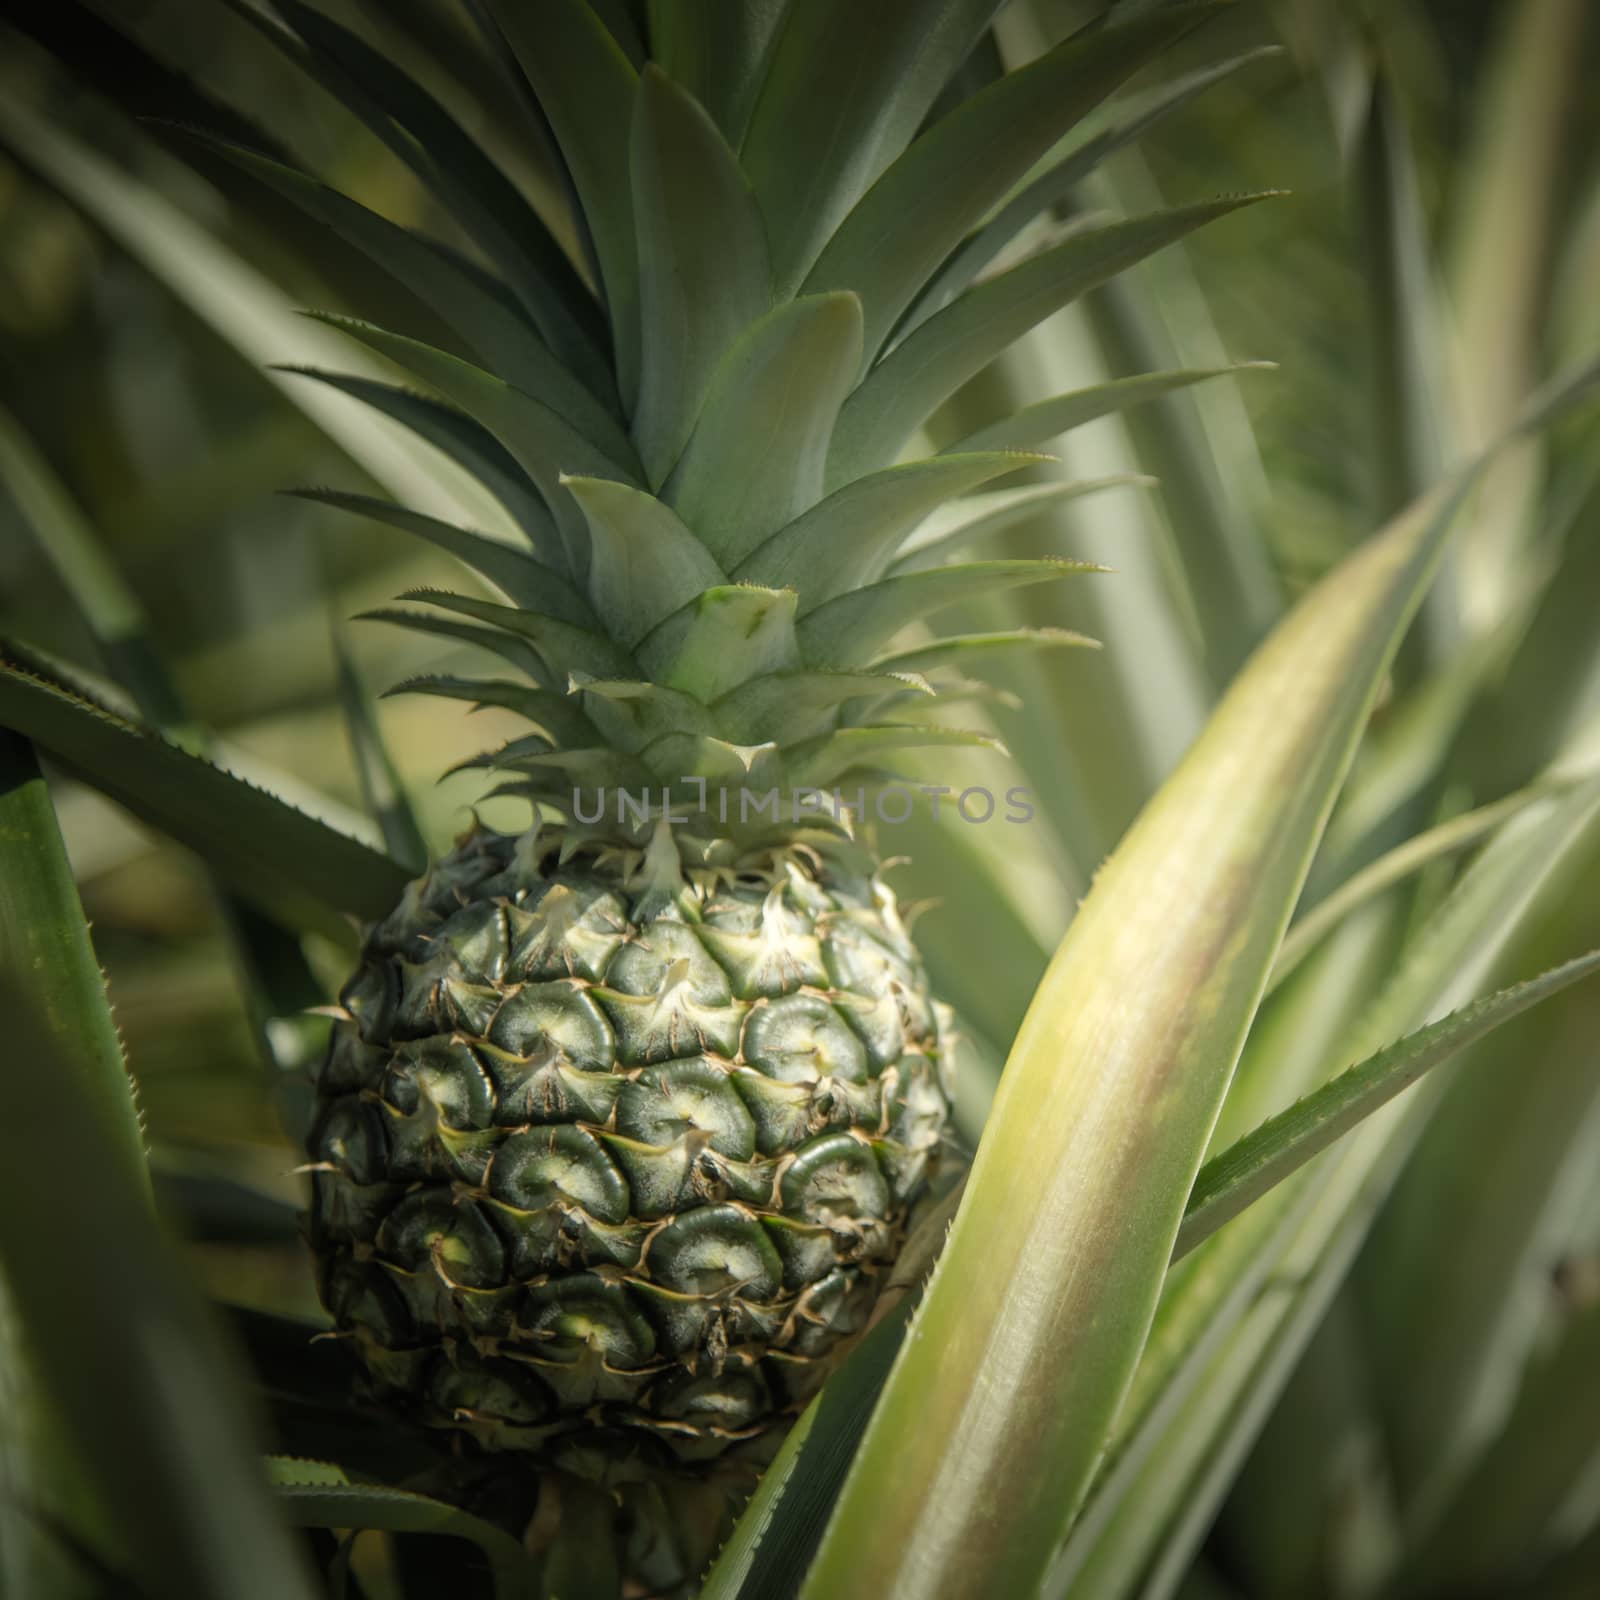 Pineapple farm by pixbox77